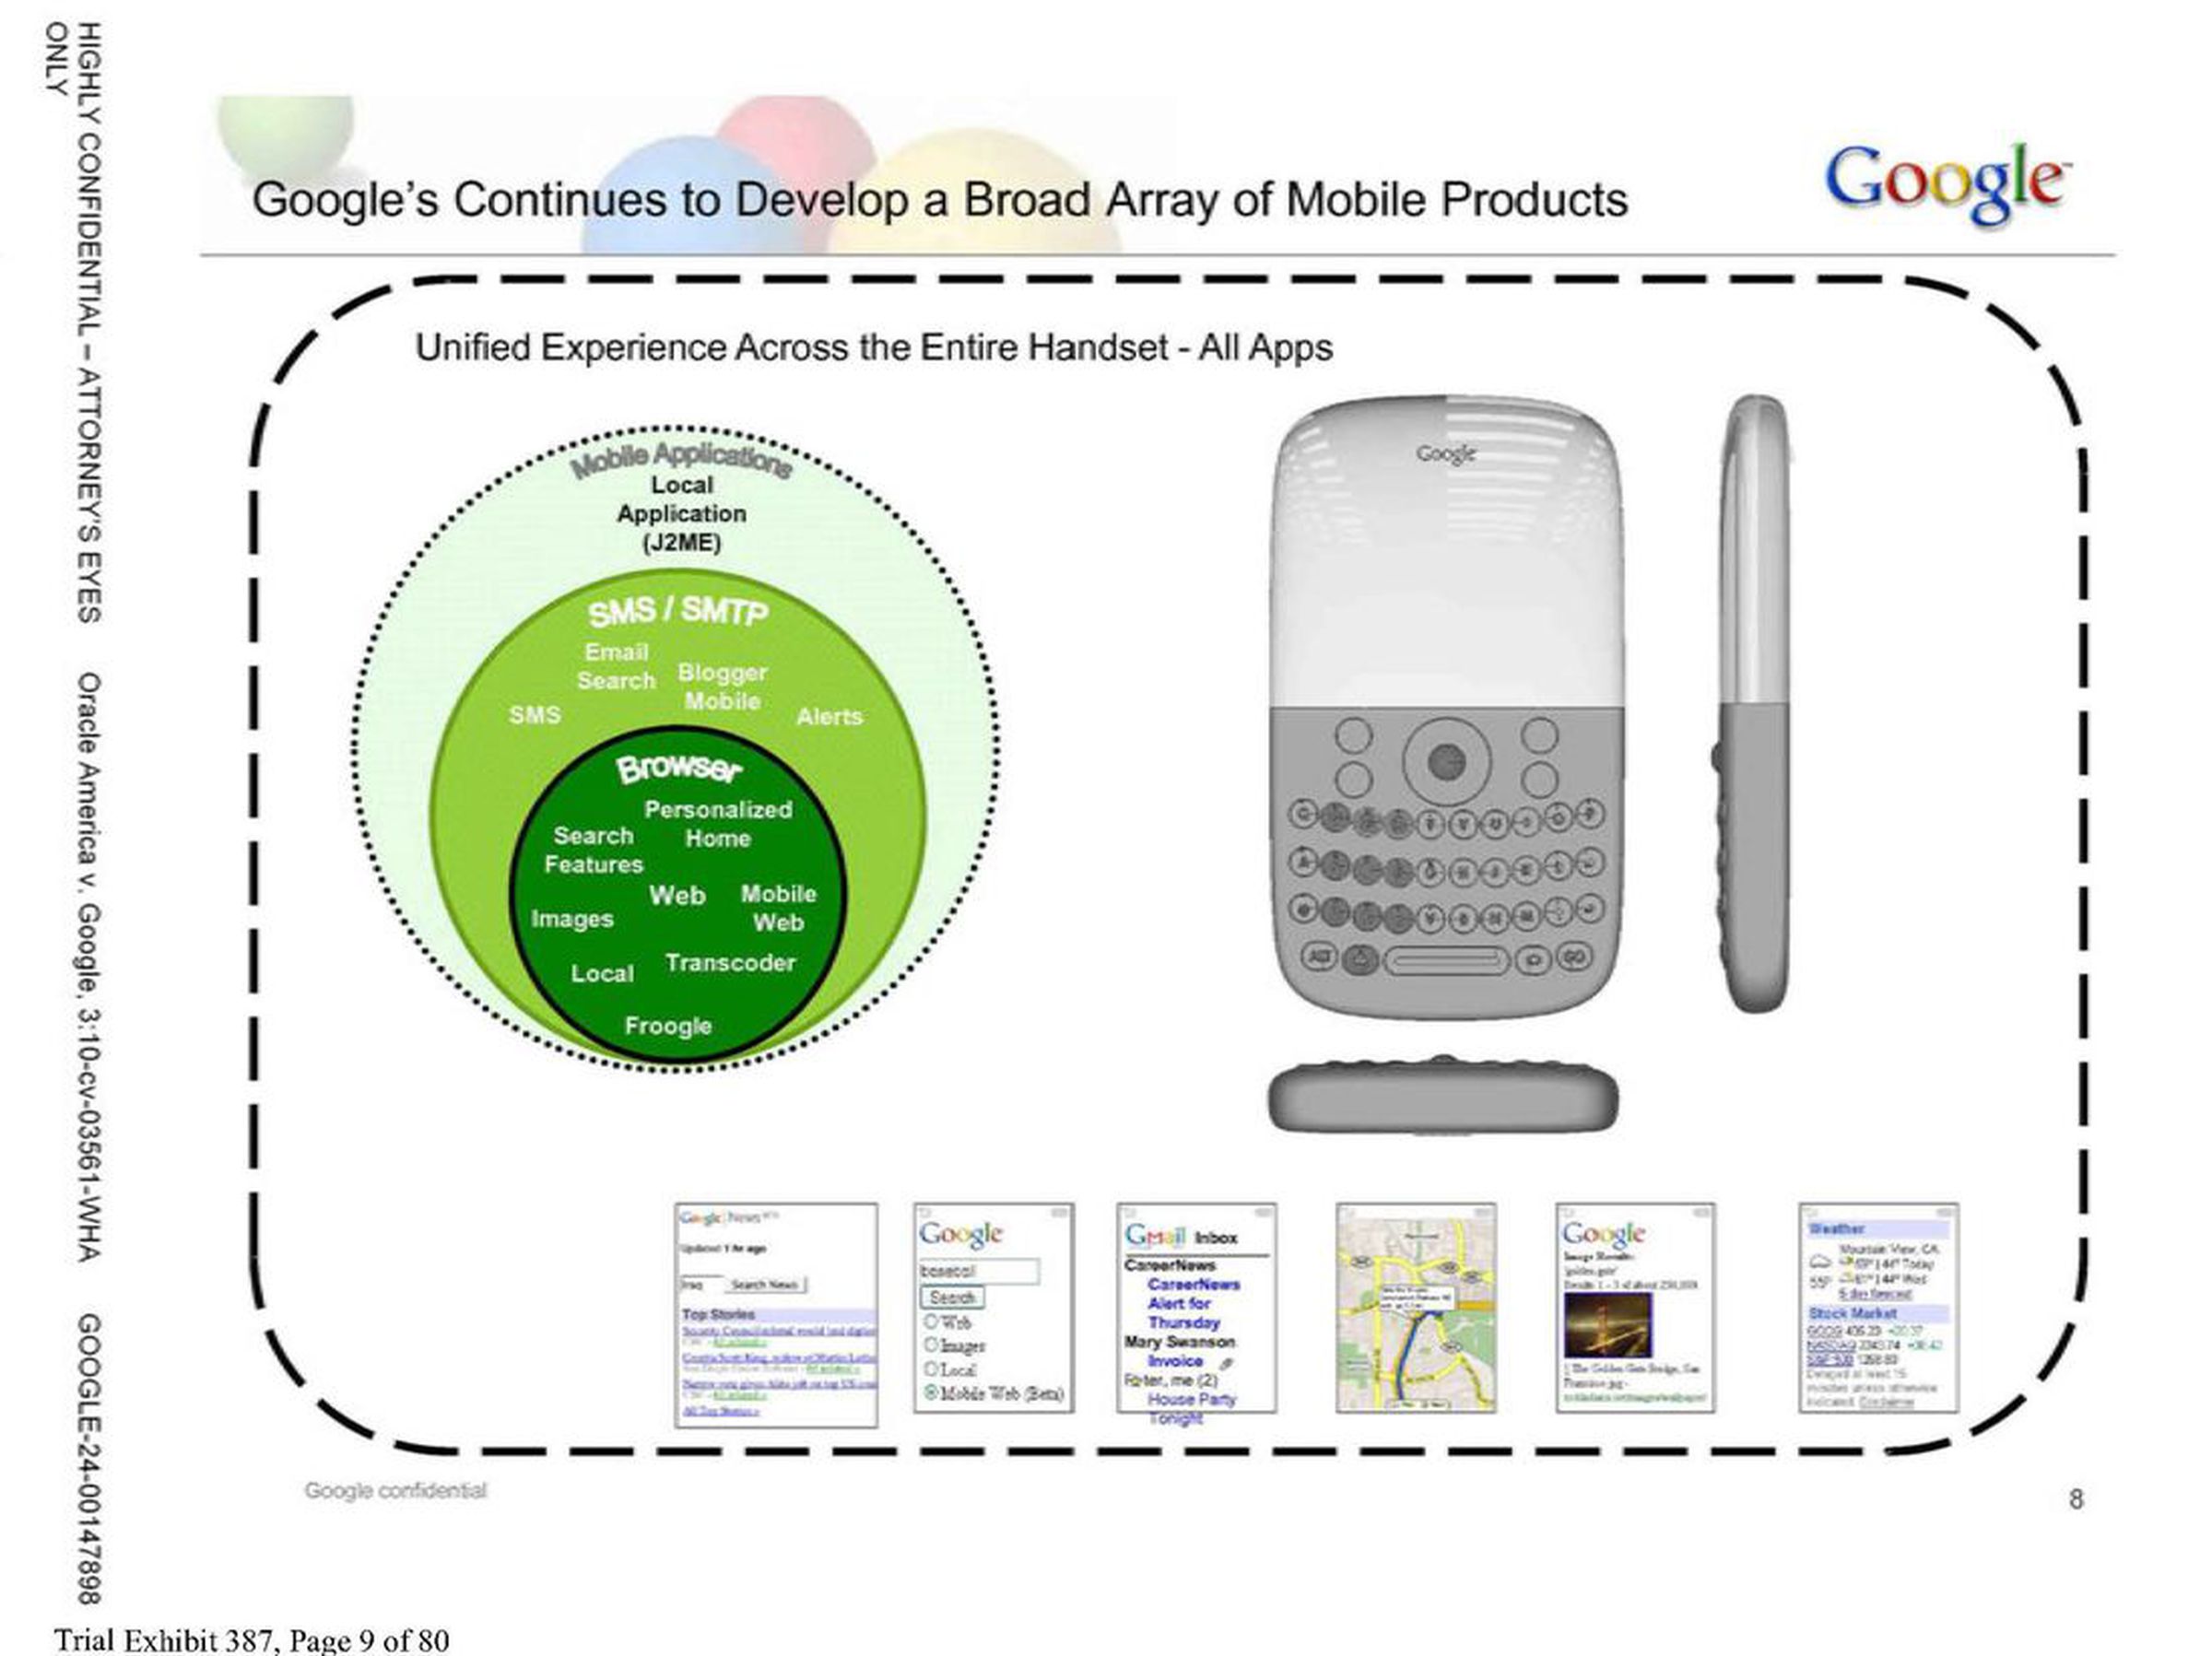 Google's slides sent to T-Mobile in November 2006